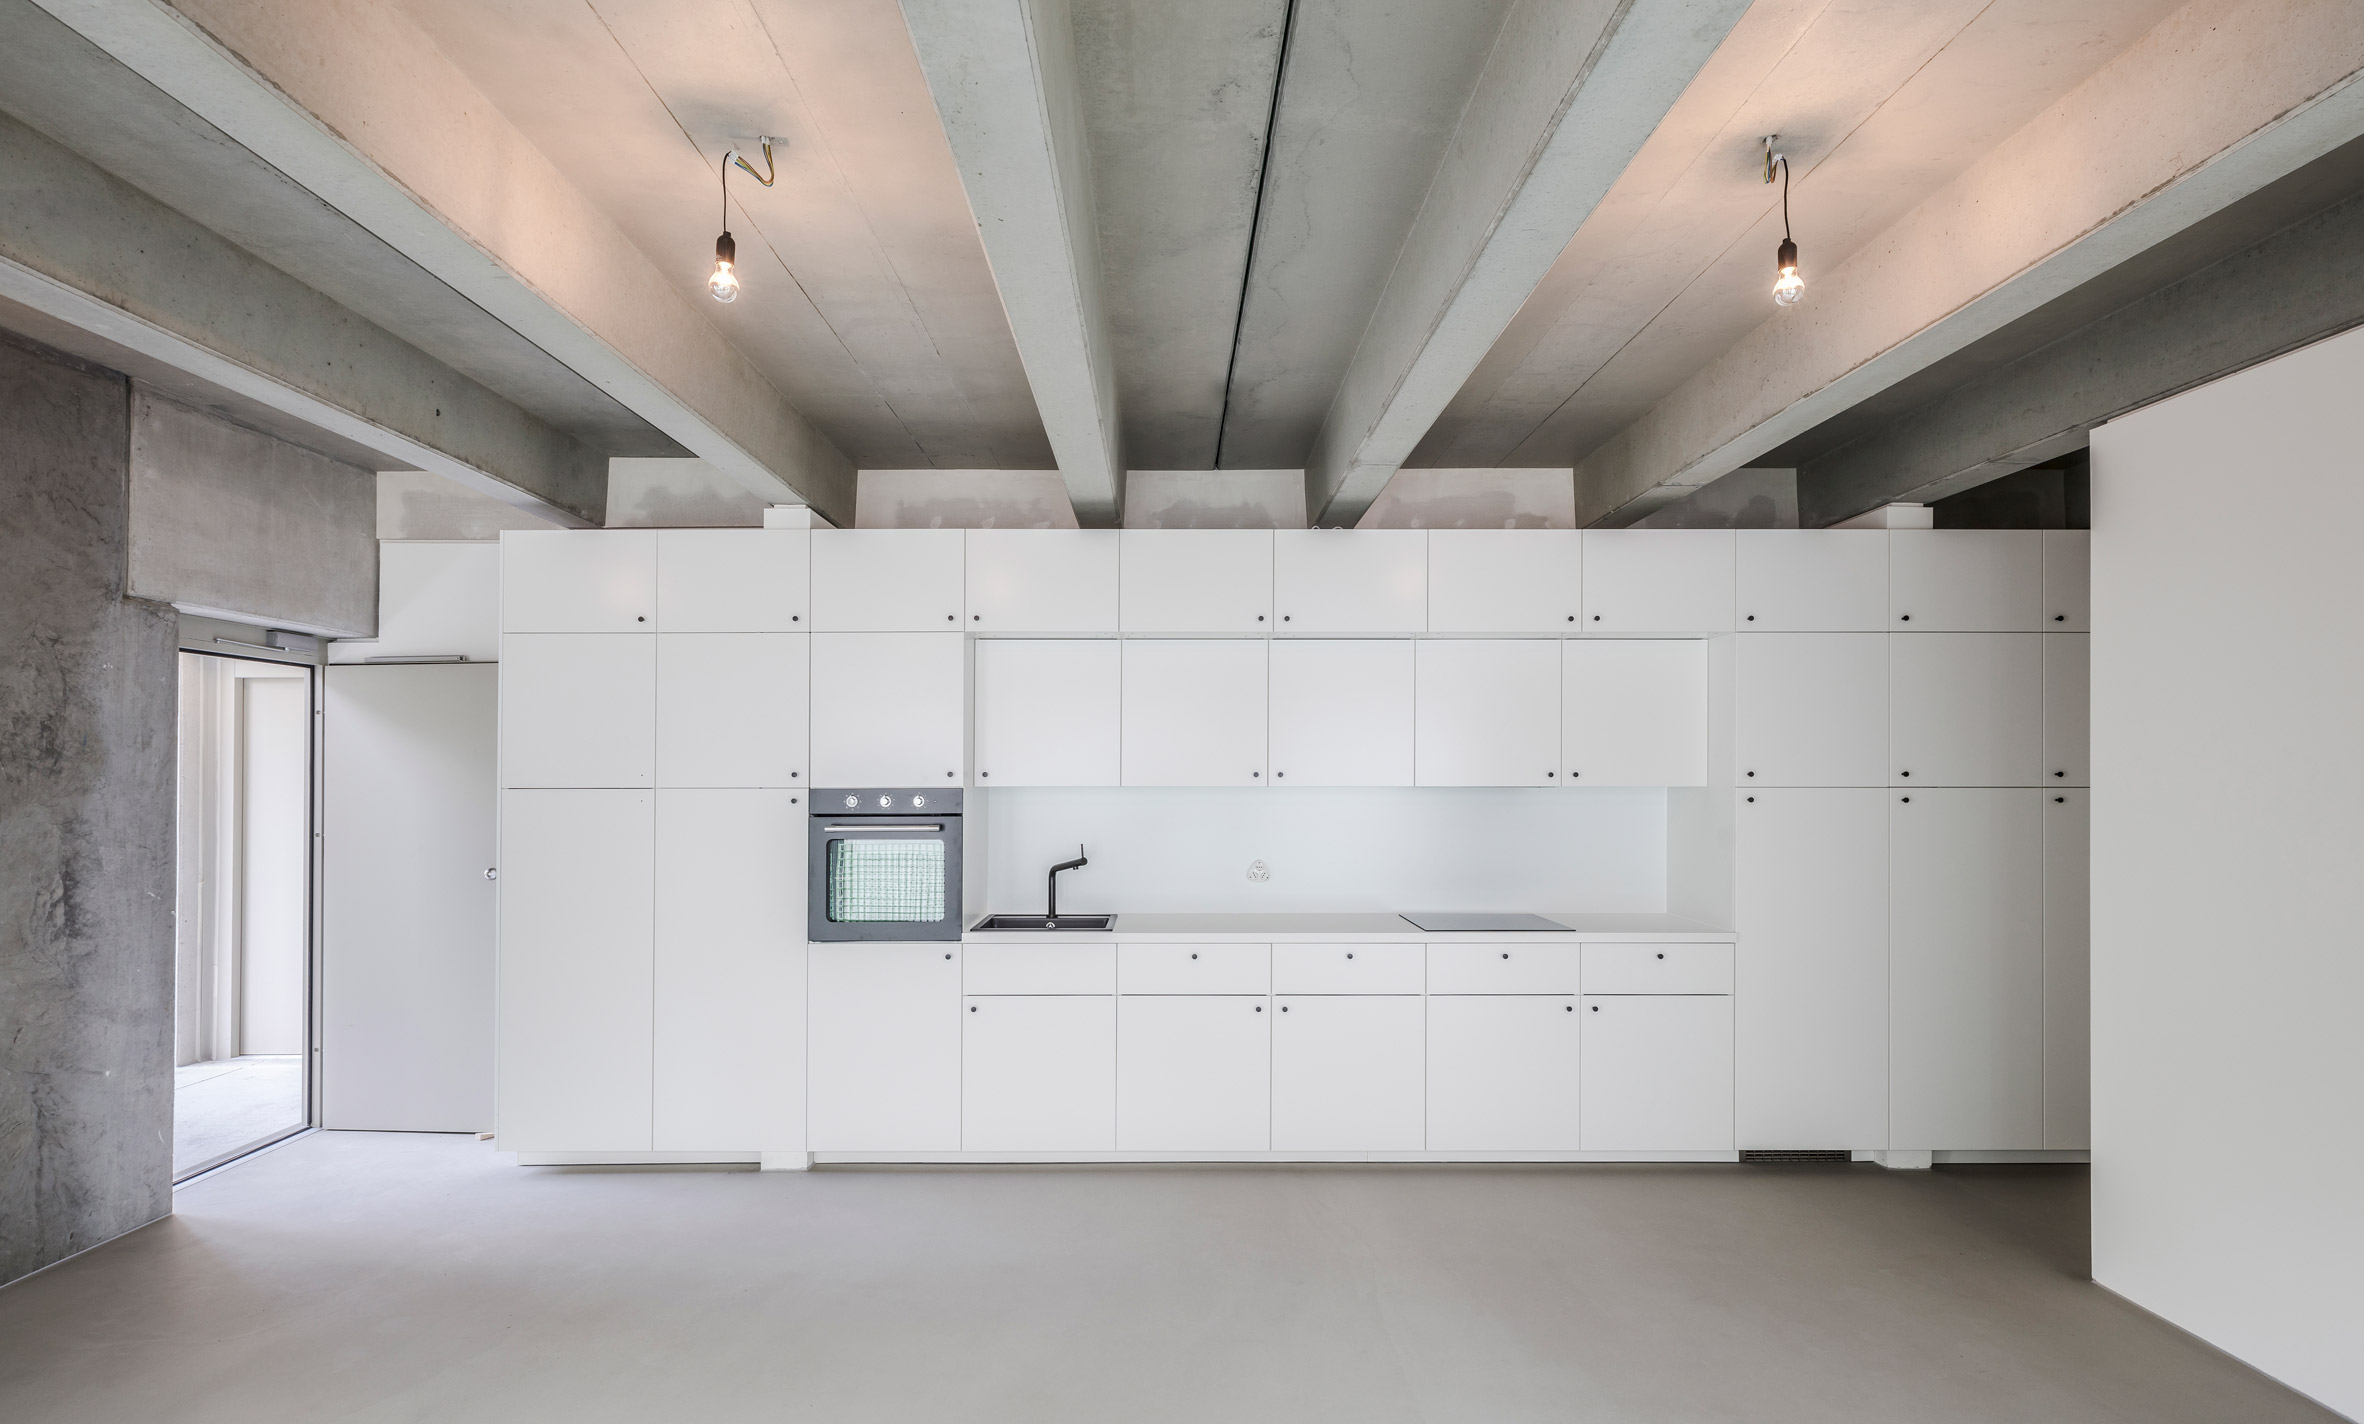 Kitchen in Wohnregal, a prefabricated concrete housing block by FAR in Berlin, Germany